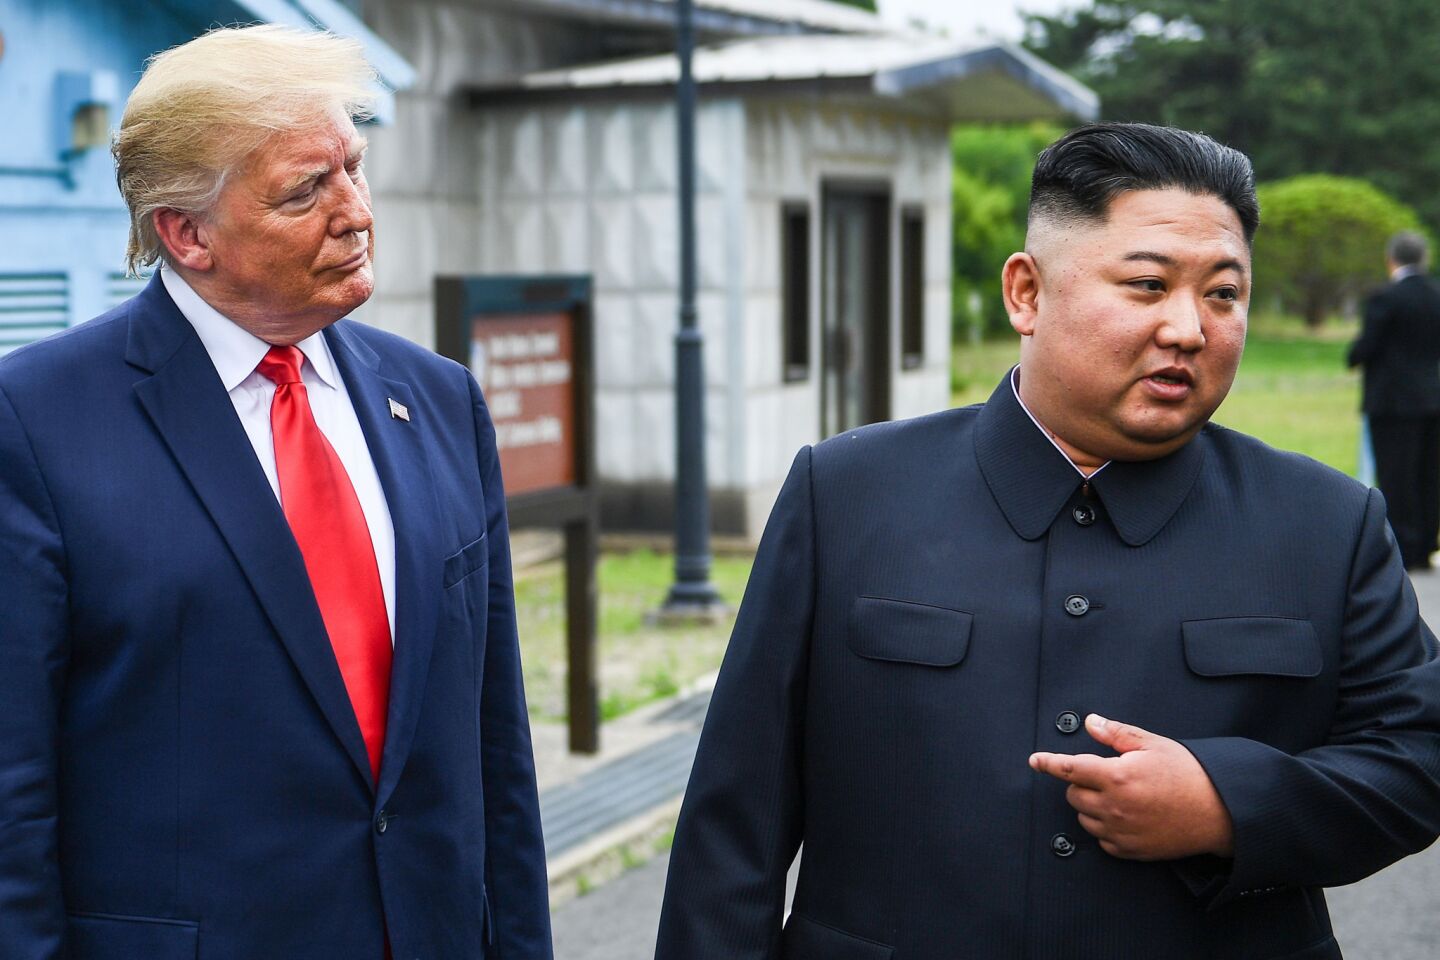 Trump crosses into North Korea